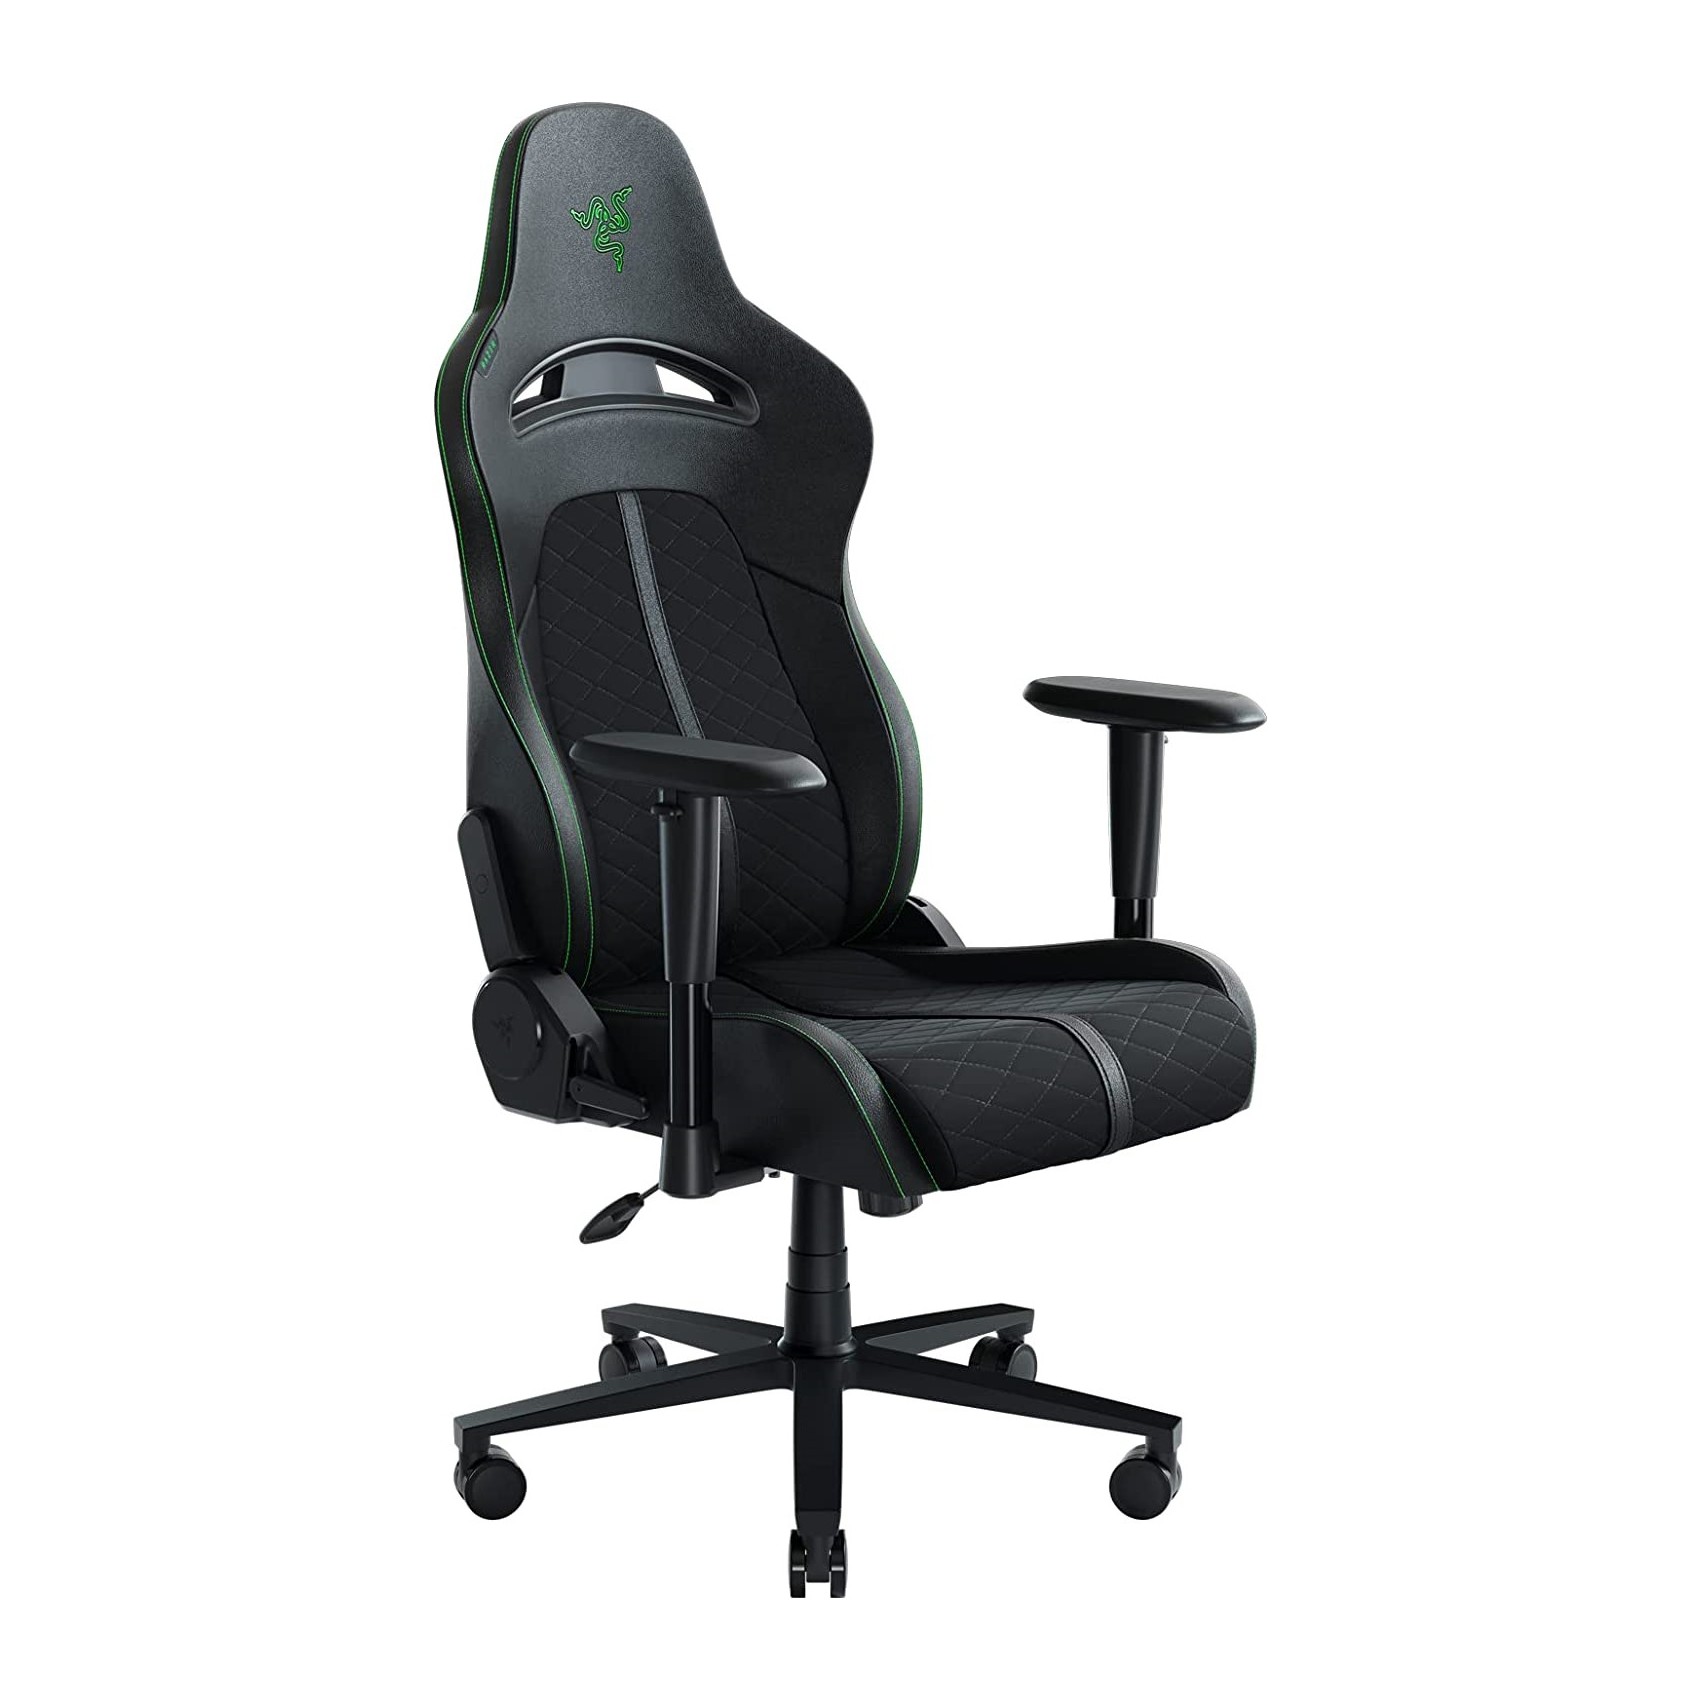 Razer Enki X Essential Gaming Chair for Gaming Performance